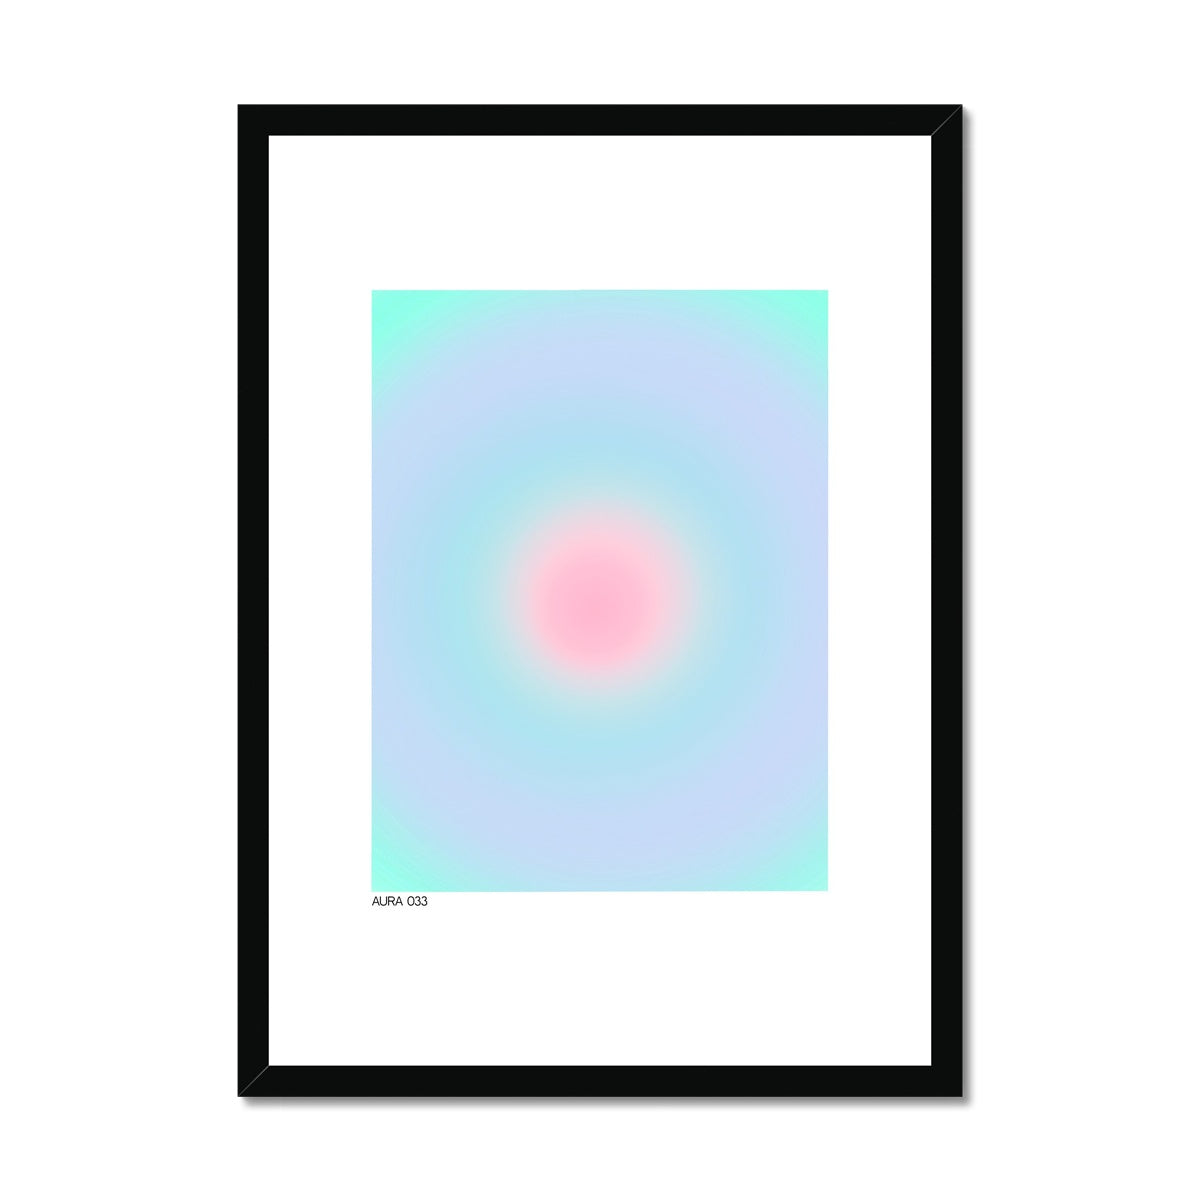 aura 033 Framed & Mounted Print